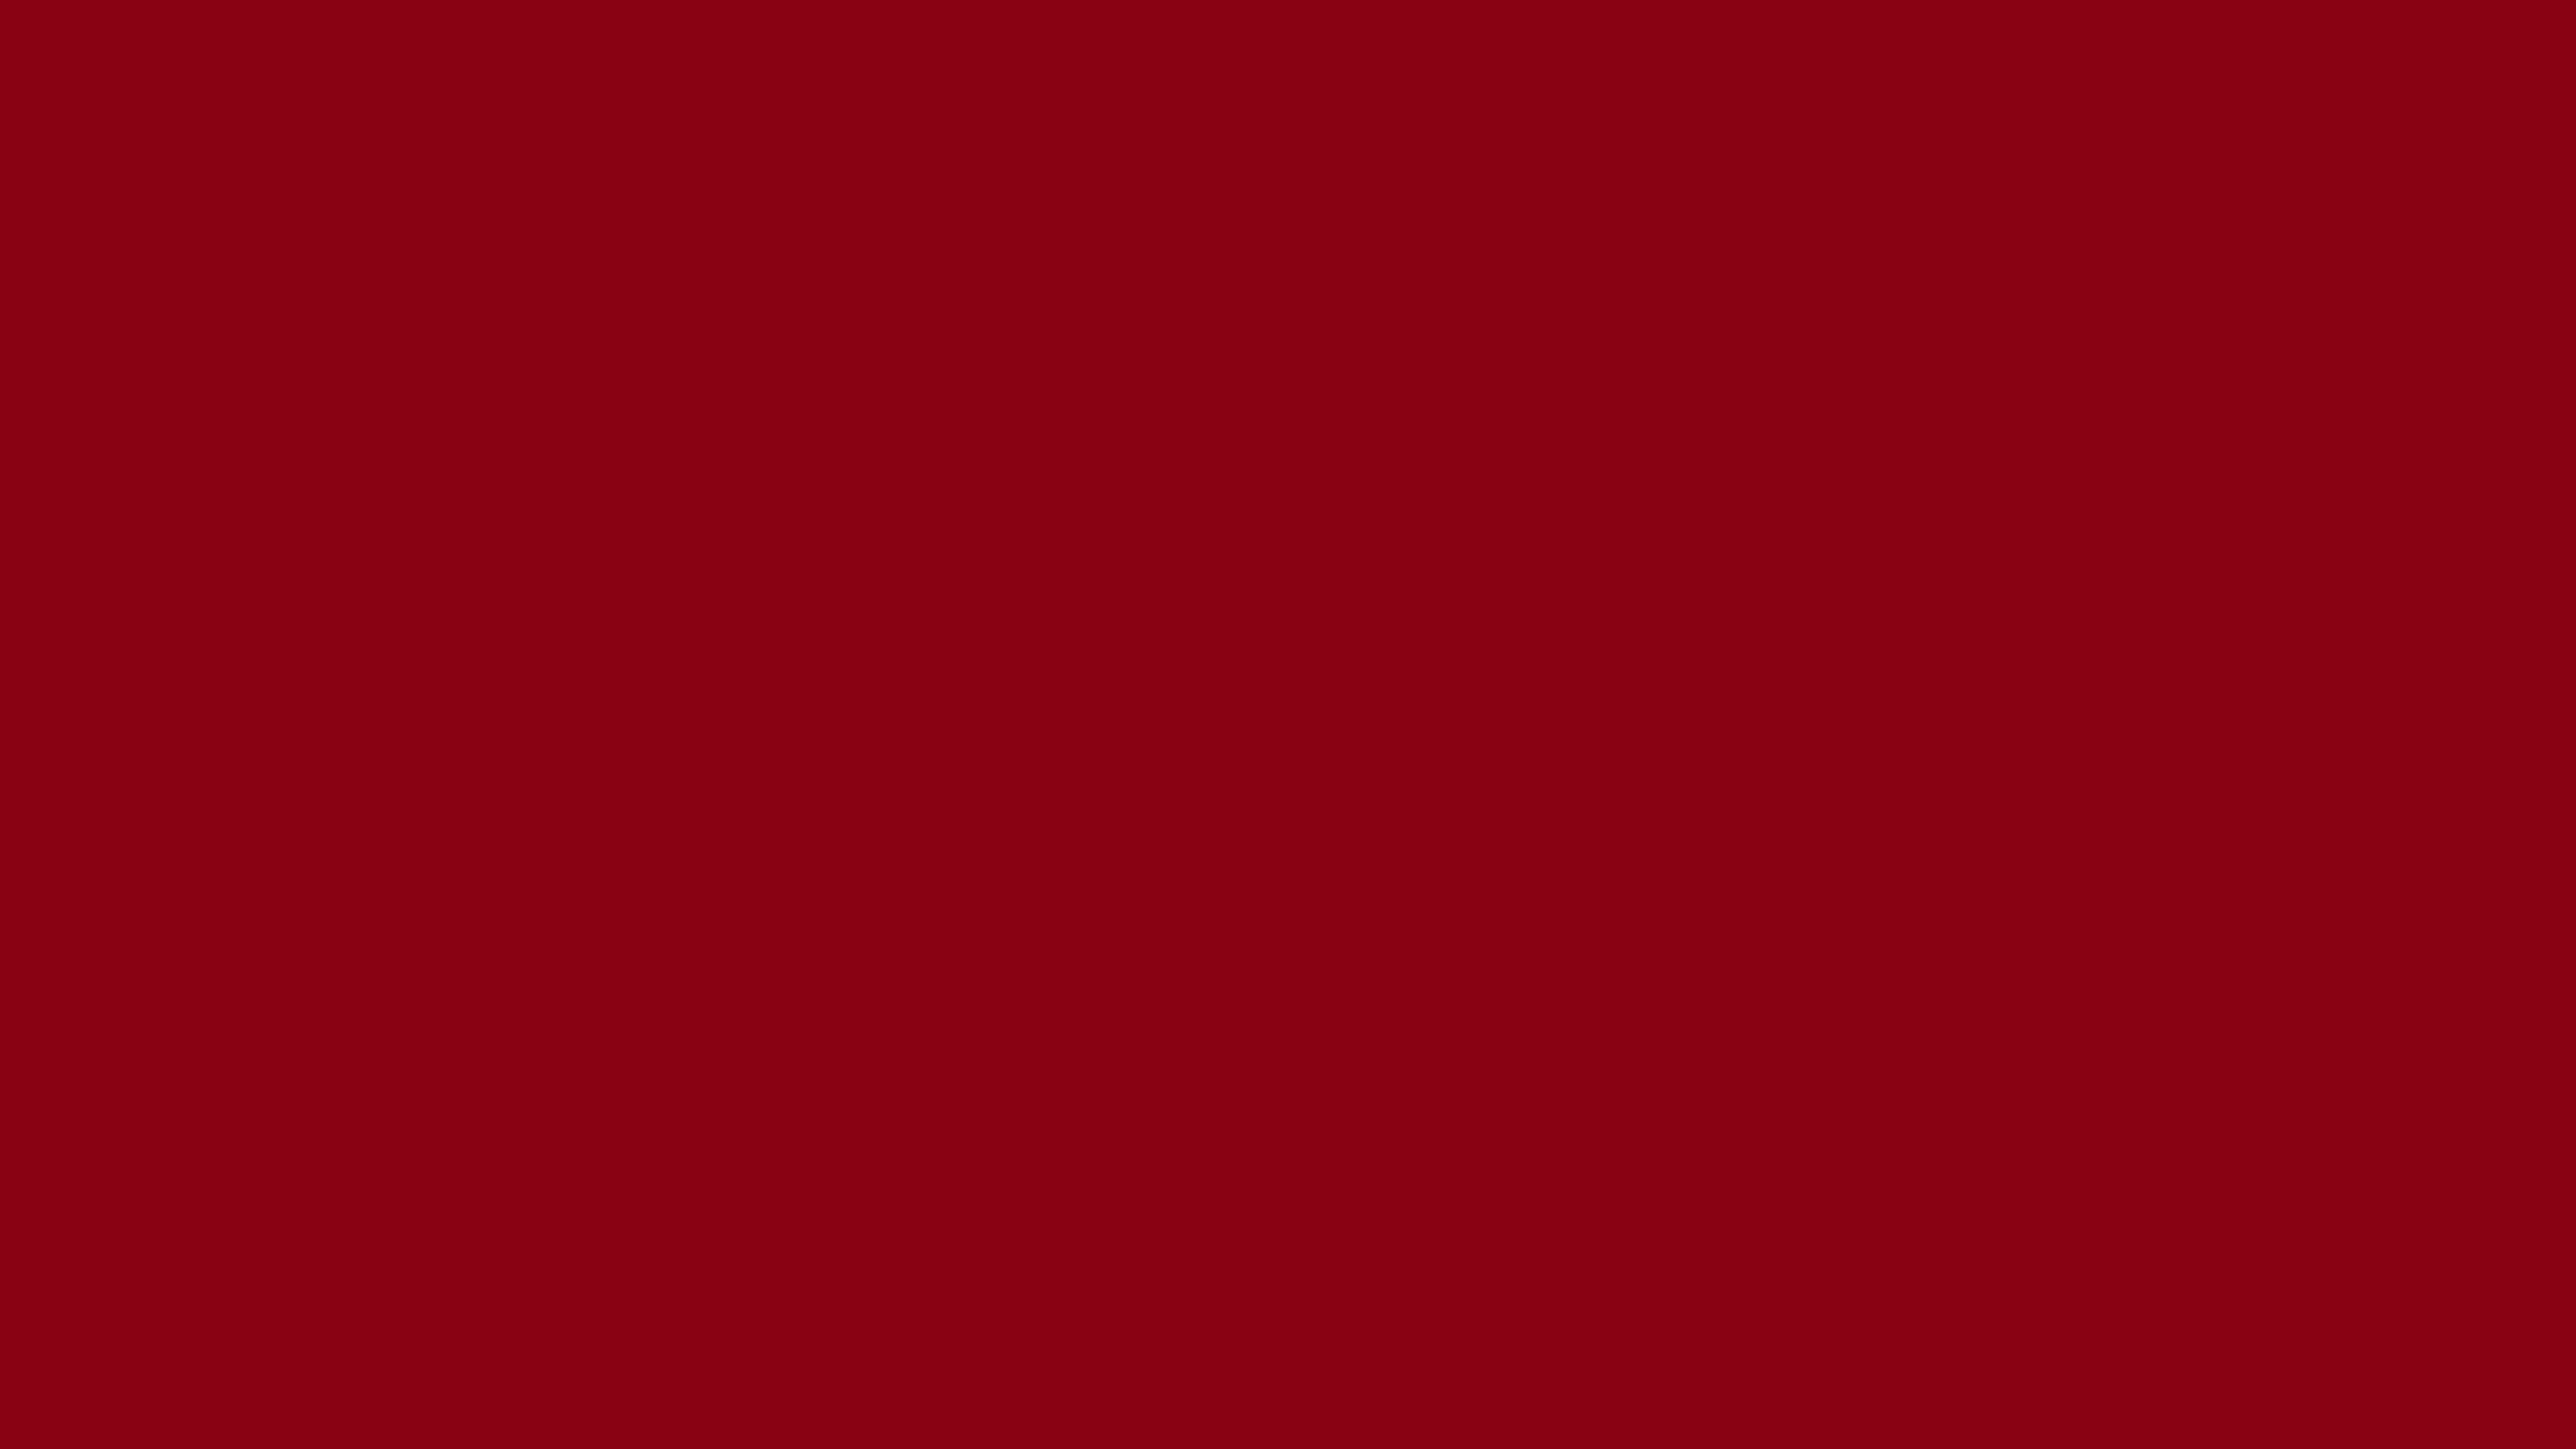 7680x4320 Red Devil Solid Color Background